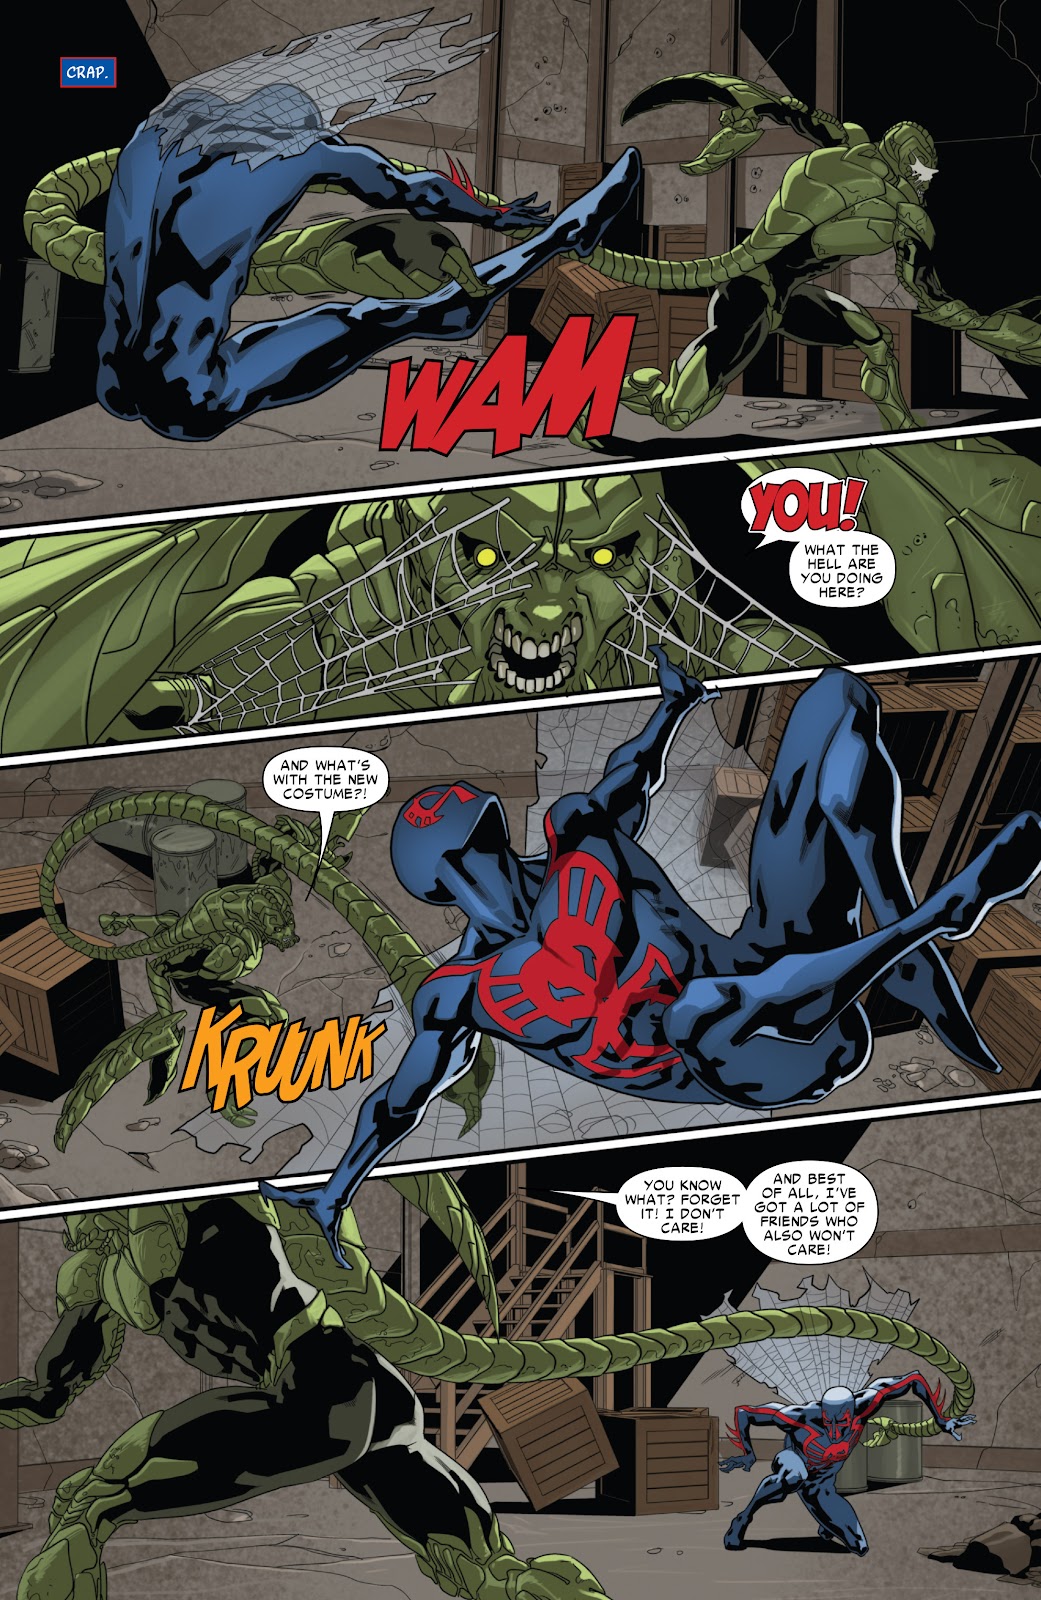 Spider-Man 2099 (2014) issue 3 - Page 21